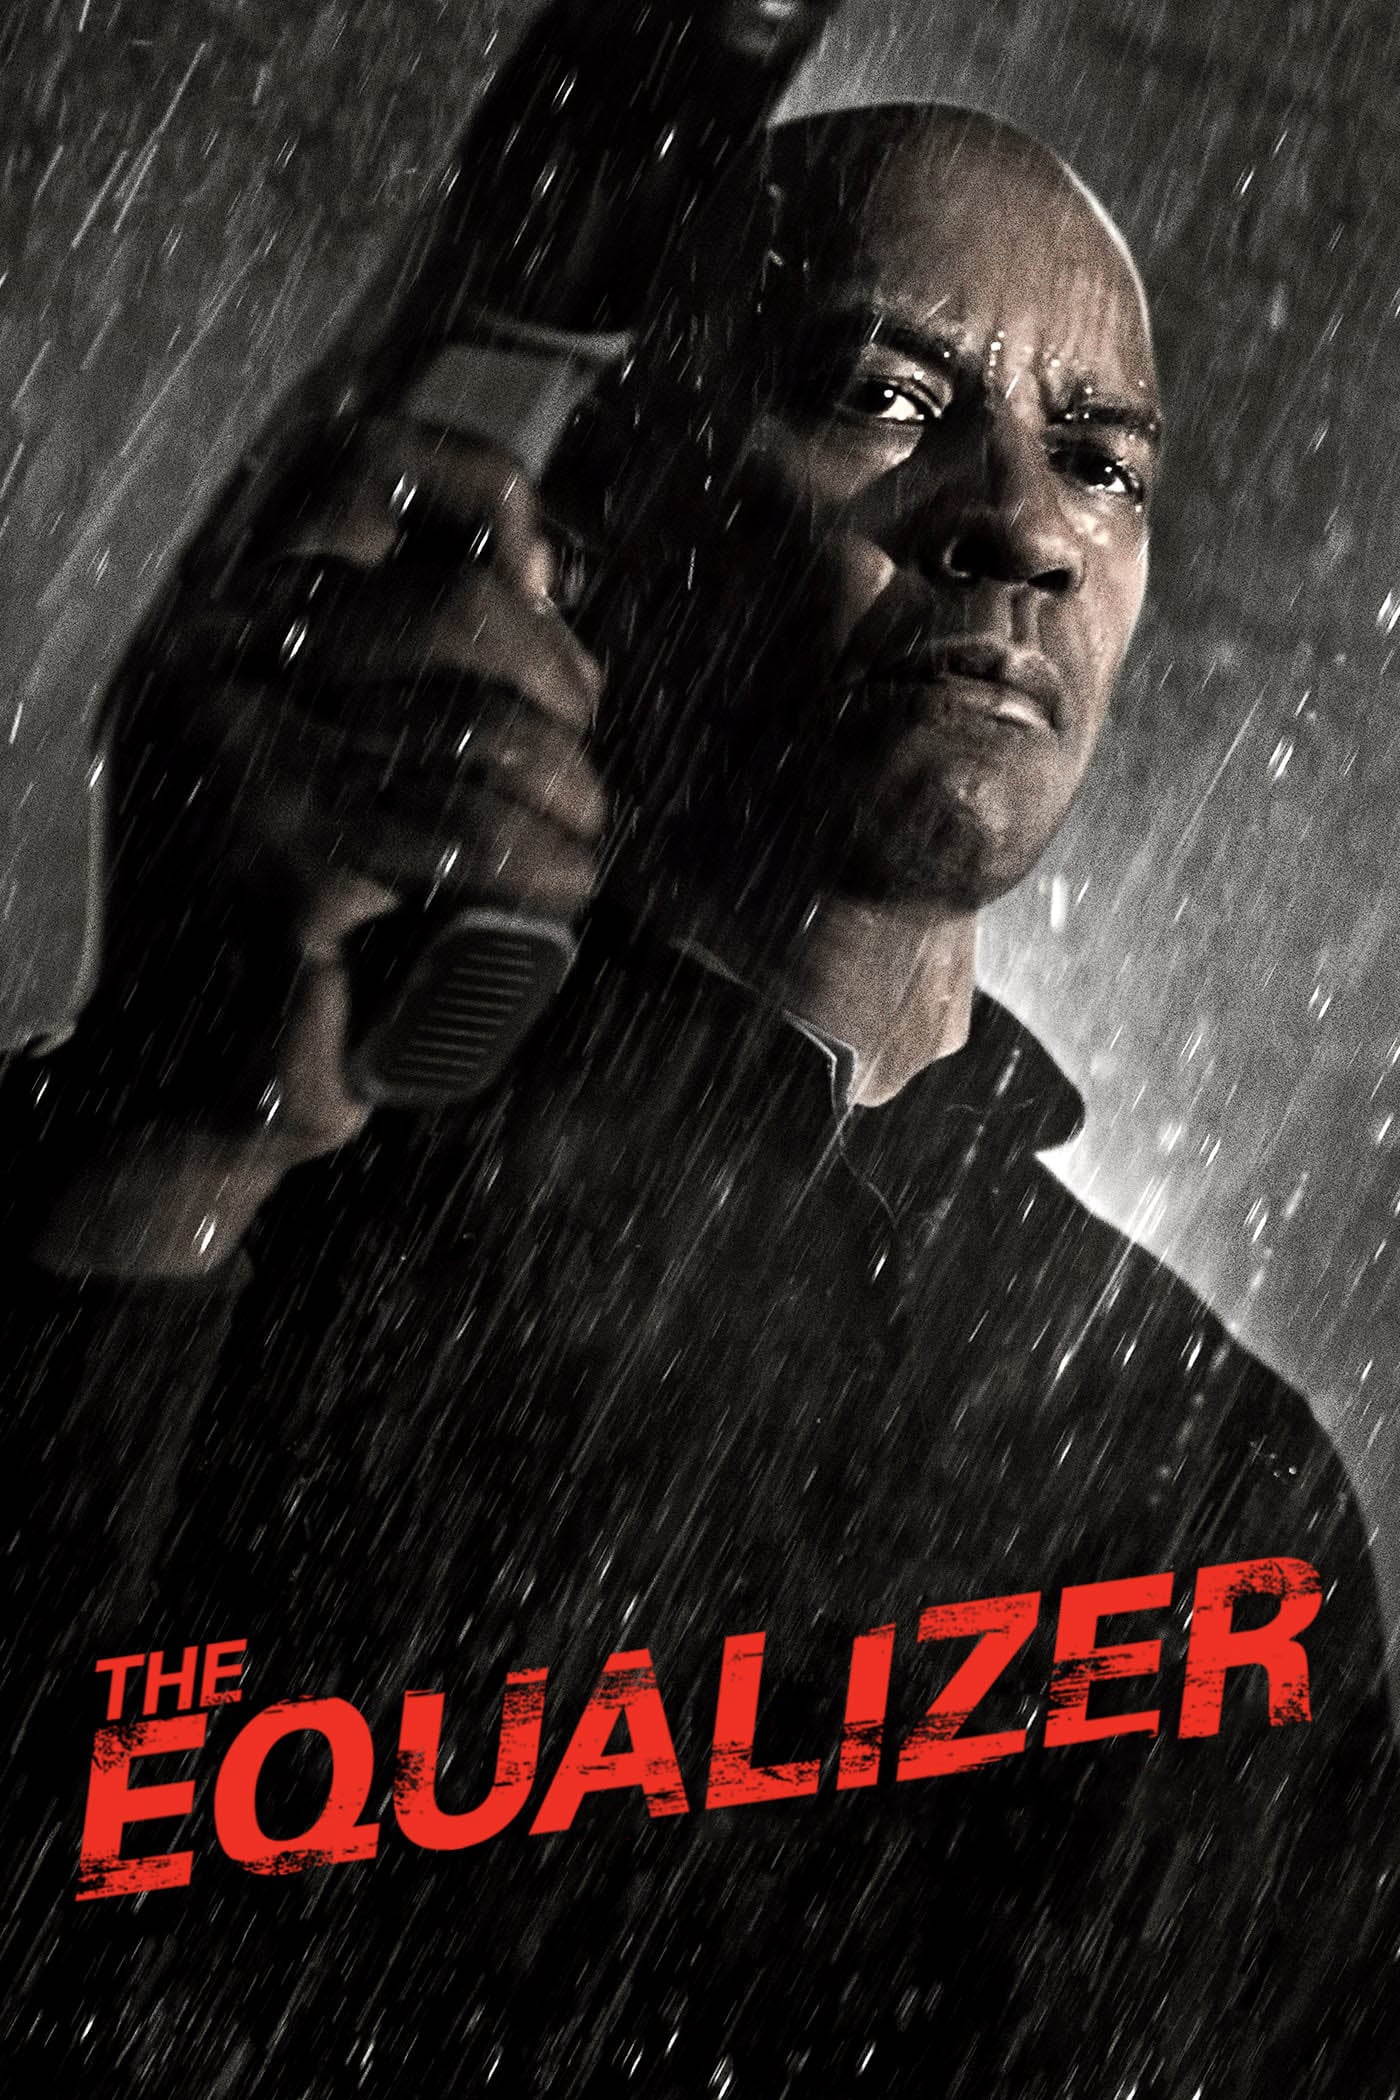 The equalizer (El protector) (2014)